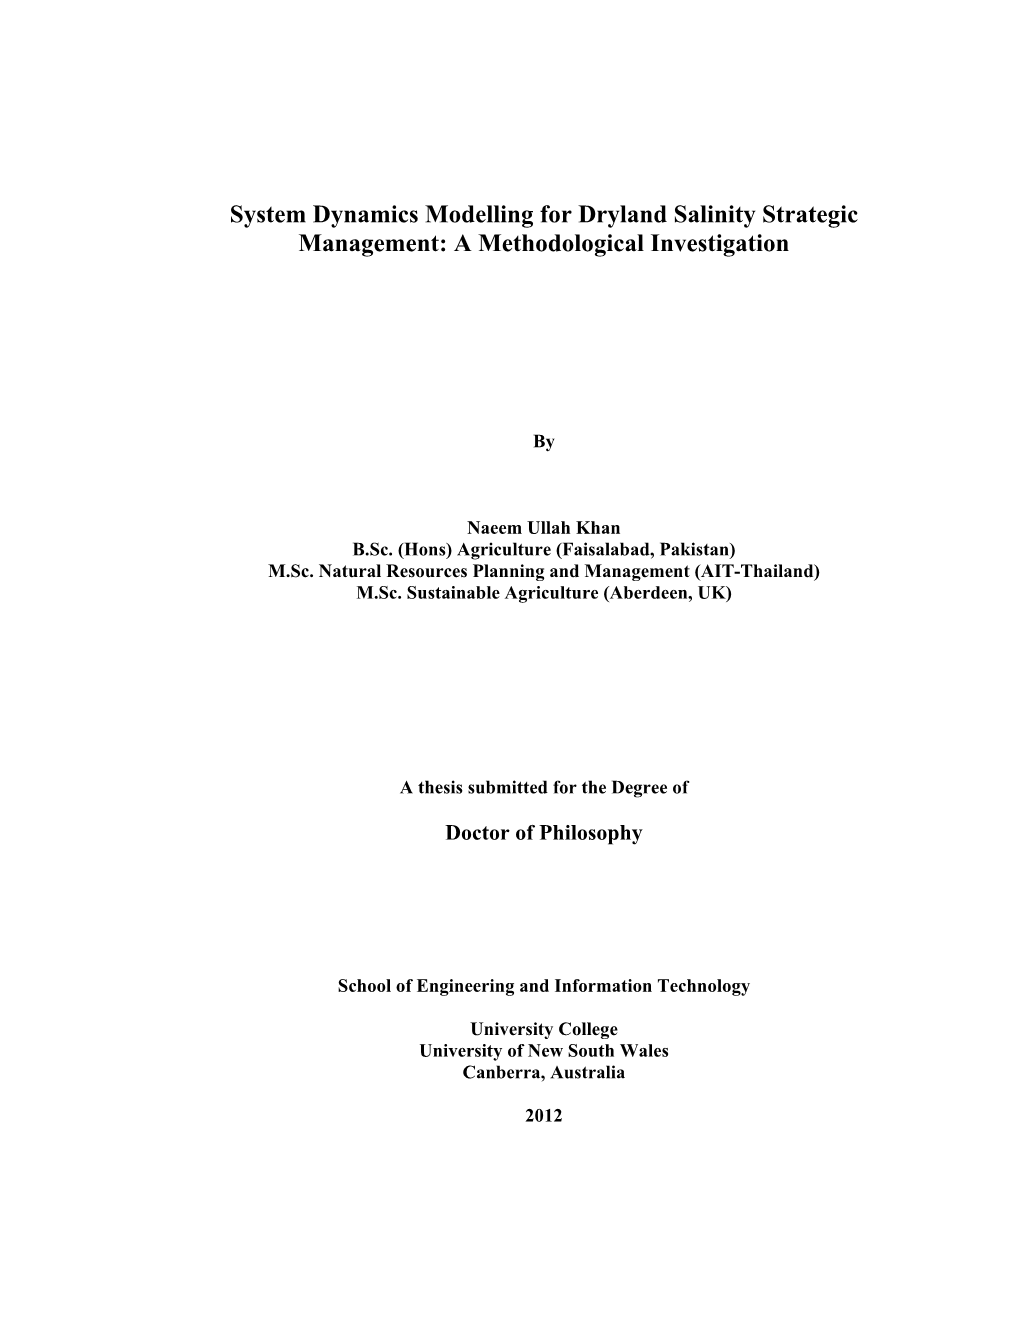 System Dynamics Modelling for Dryland Salinity Strategic Management: a Methodological Investigation